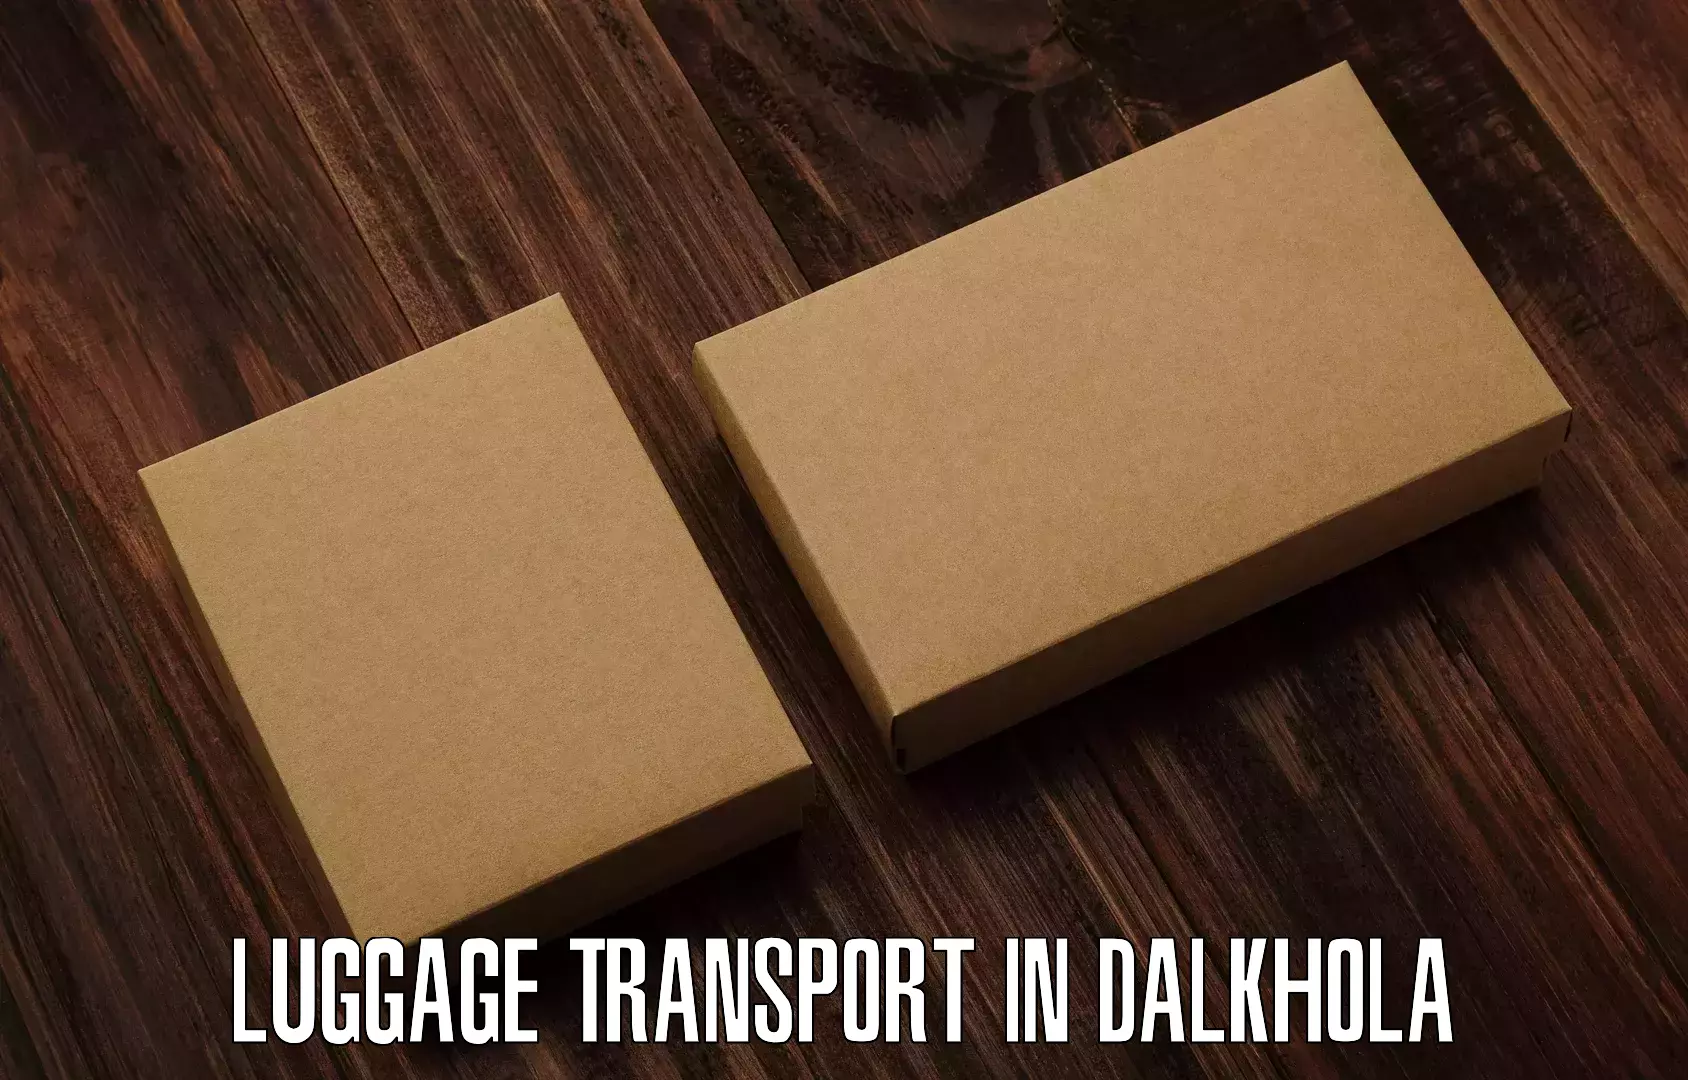 Doorstep luggage pickup in Dalkhola